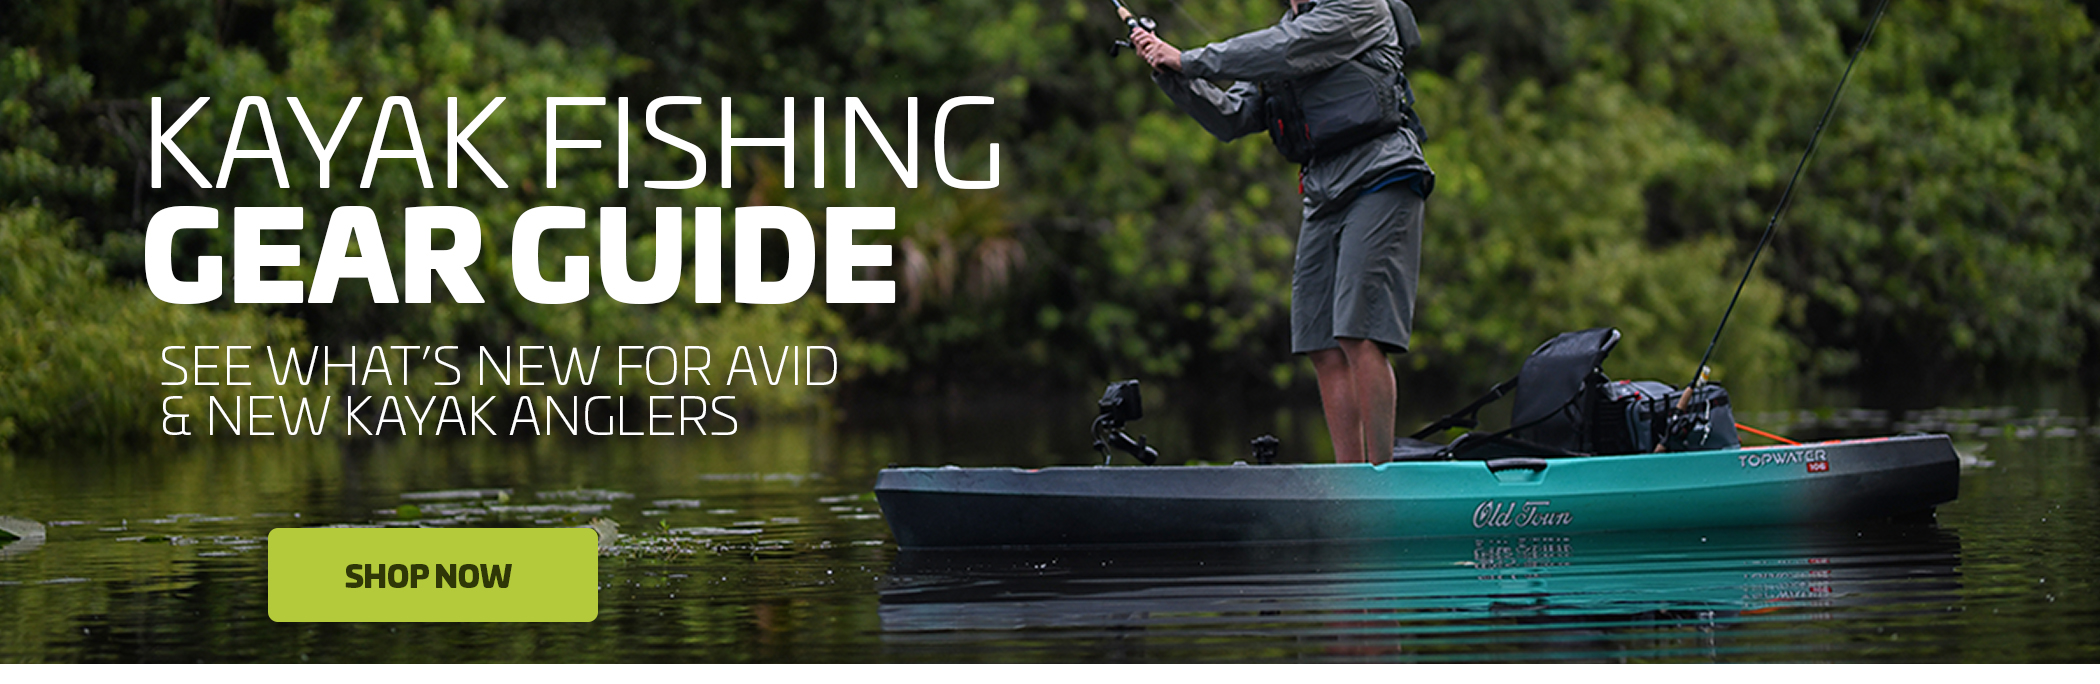 Kayak Fishing Gear Guide